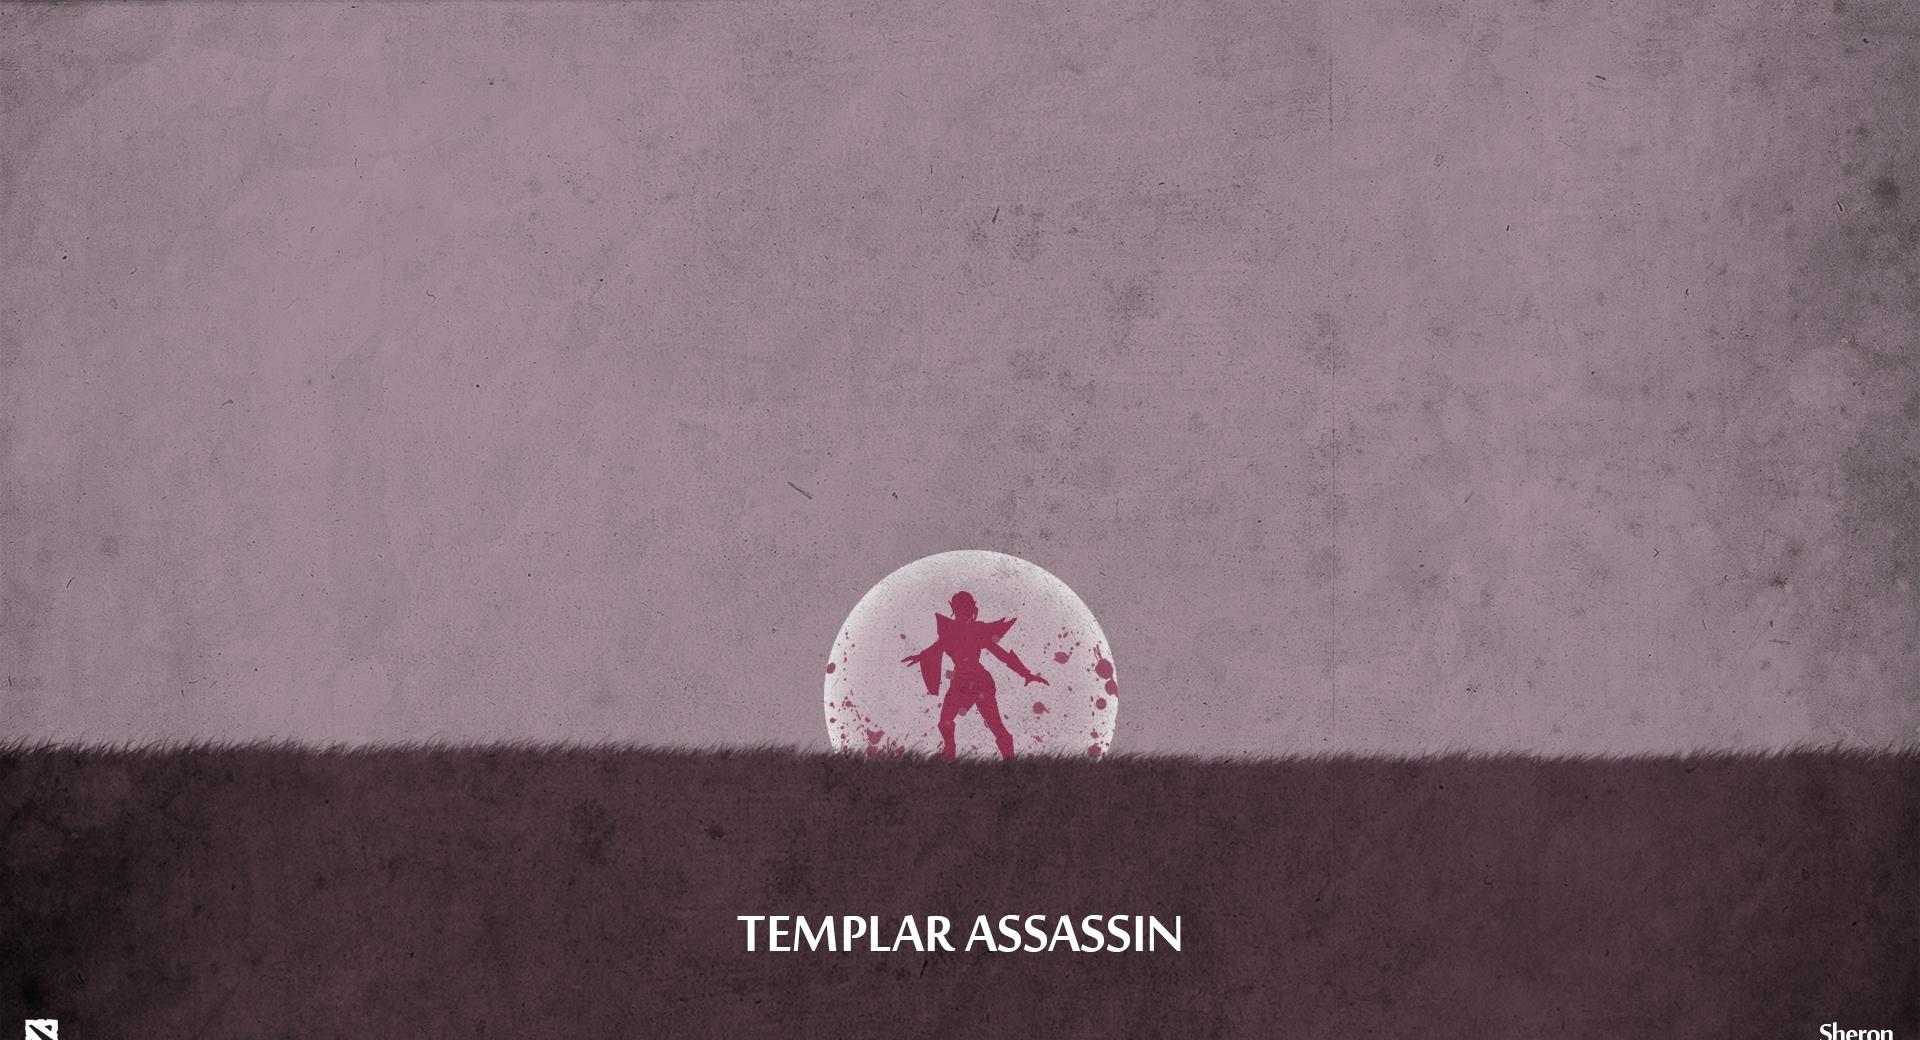 Templar Assassin - DotA 2 at 1280 x 960 size wallpapers HD quality